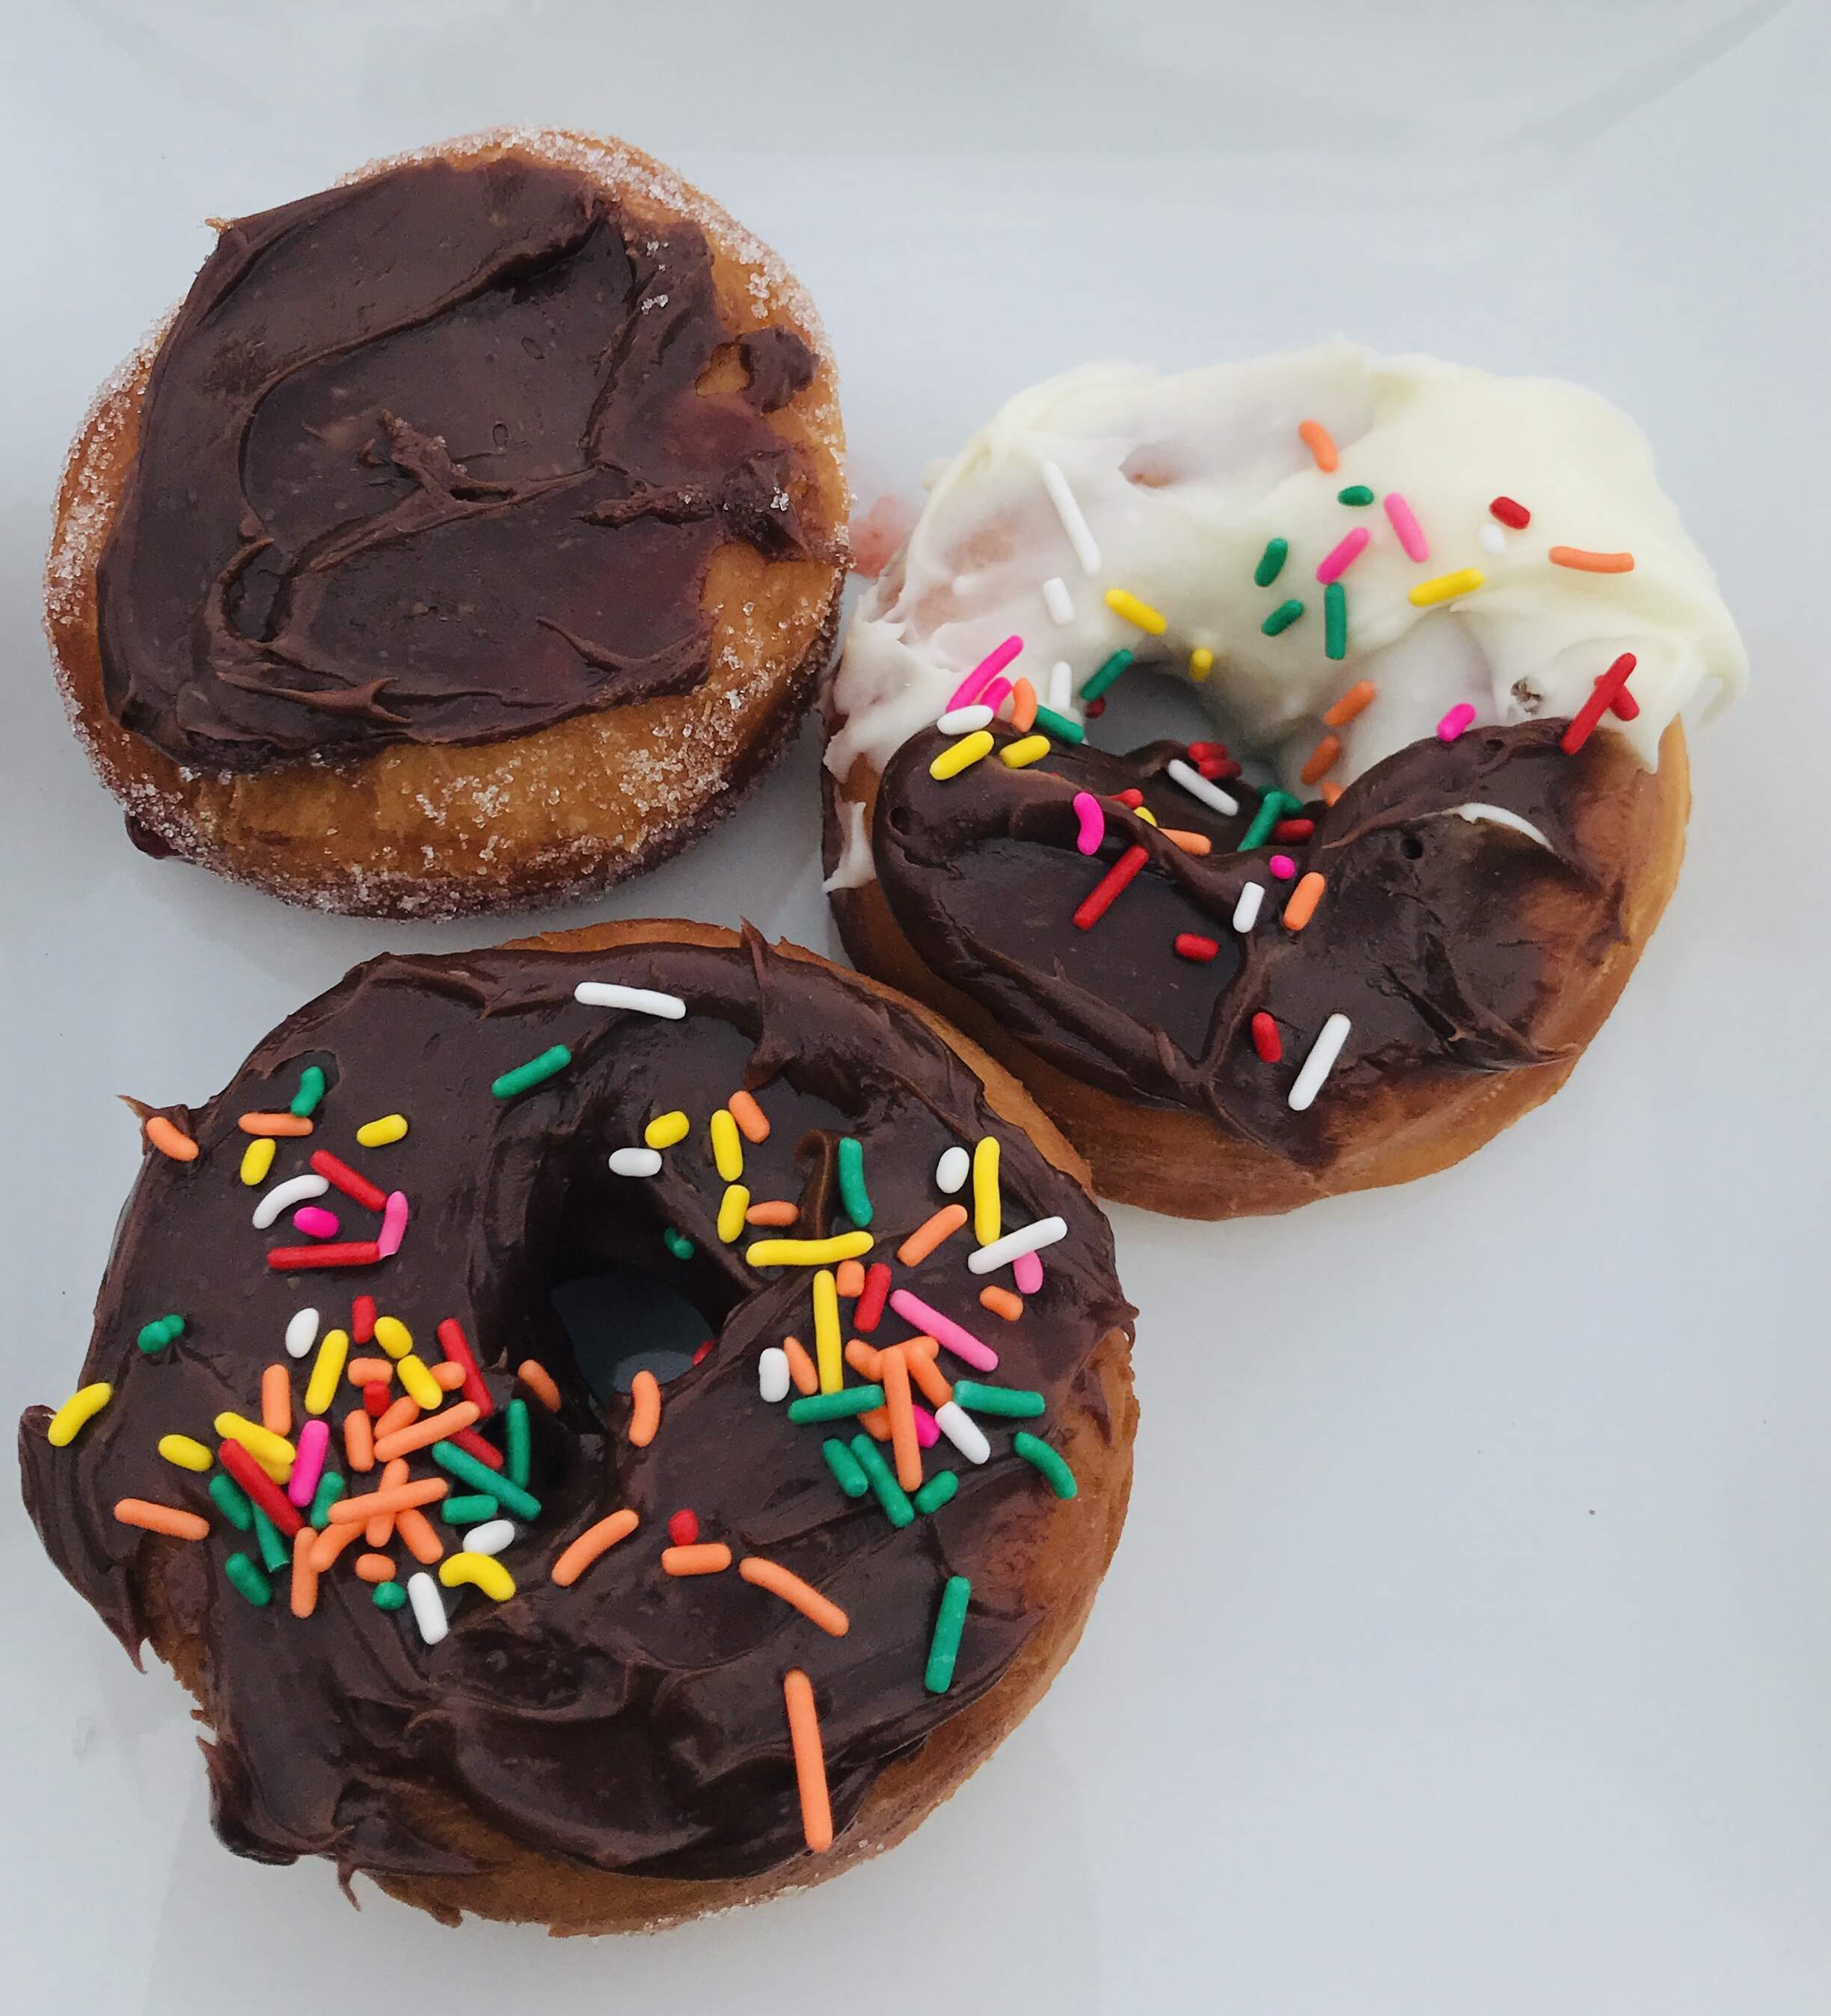 Chocolate cake donuts